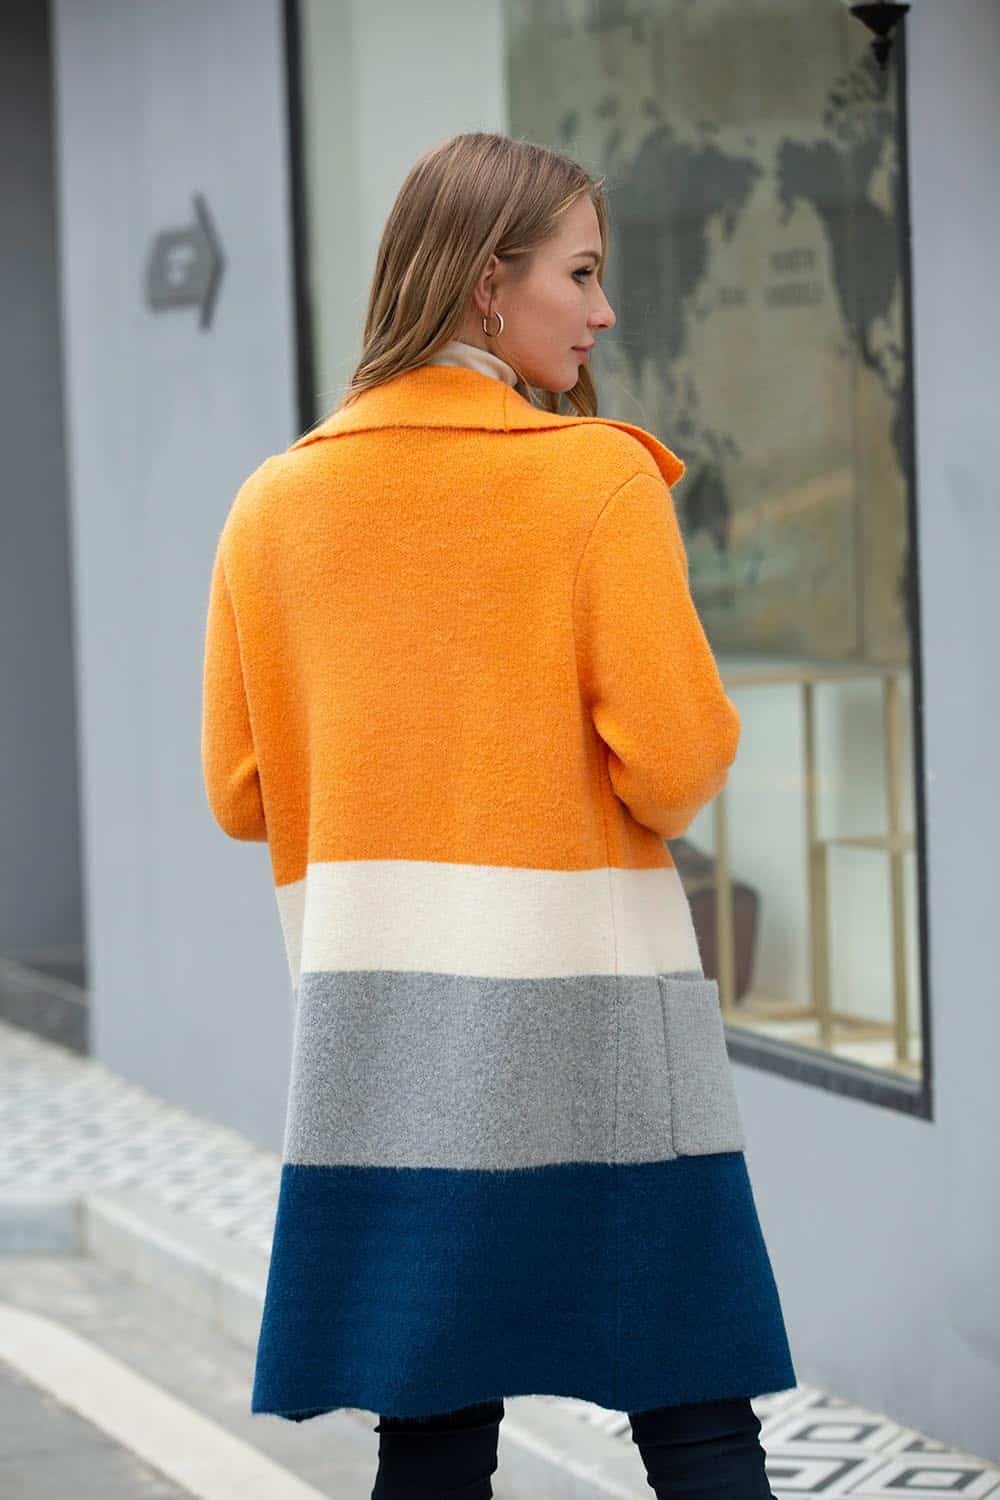 Knitted Luv Orange Coat